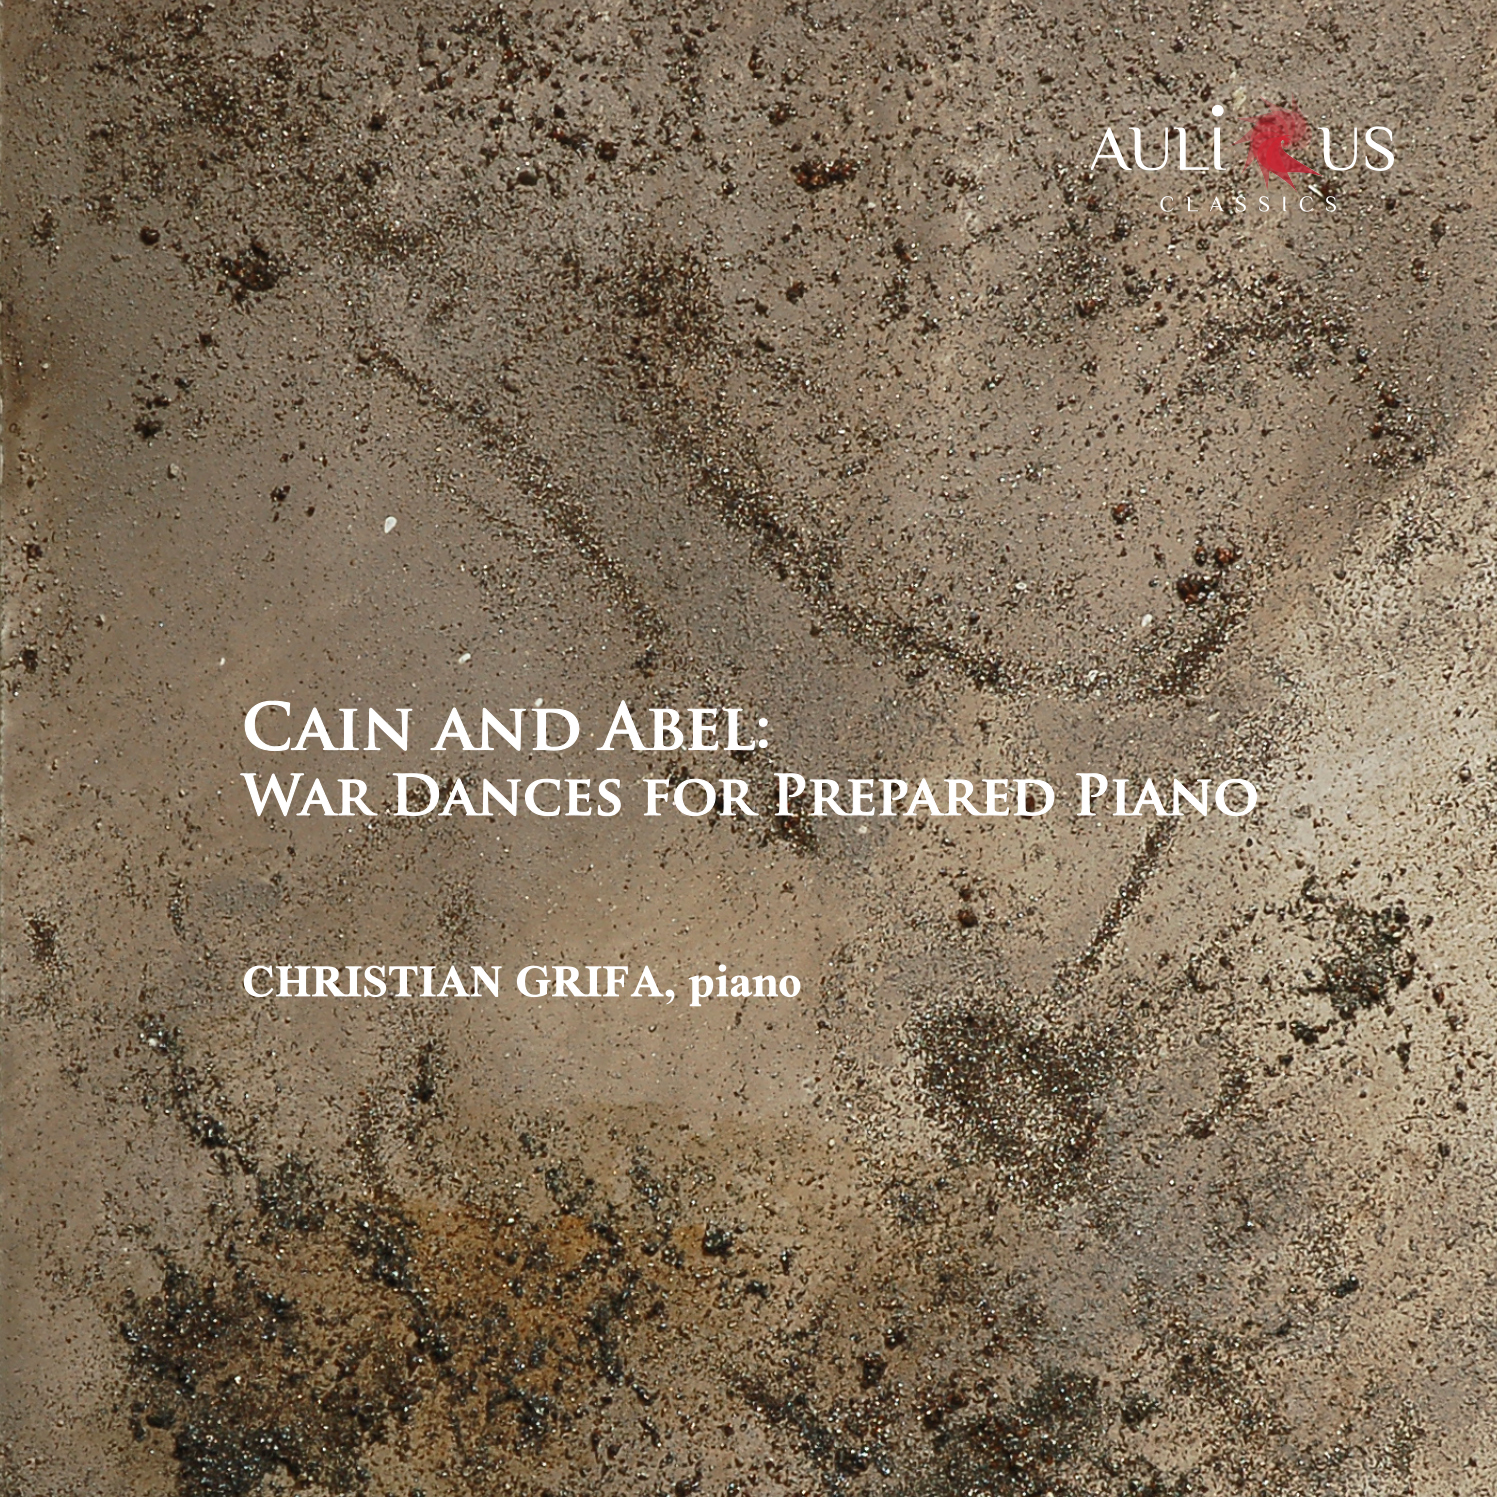 ALC 0102 Cain and Abel War Dances for prepared piano